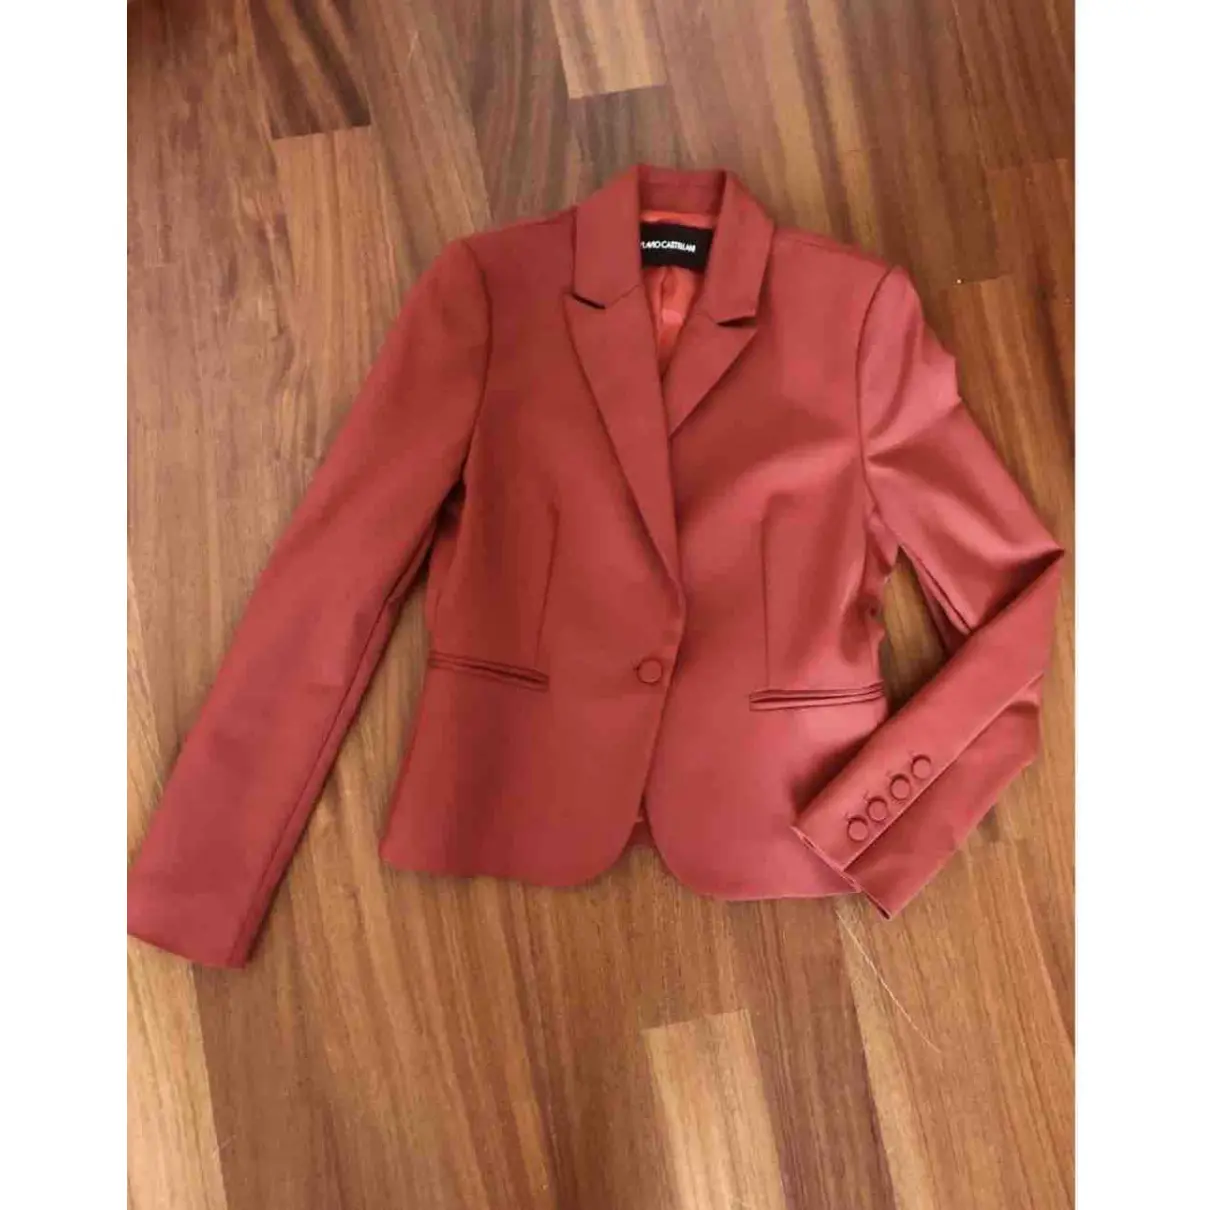 Buy Flavio Castellani Suit jacket online